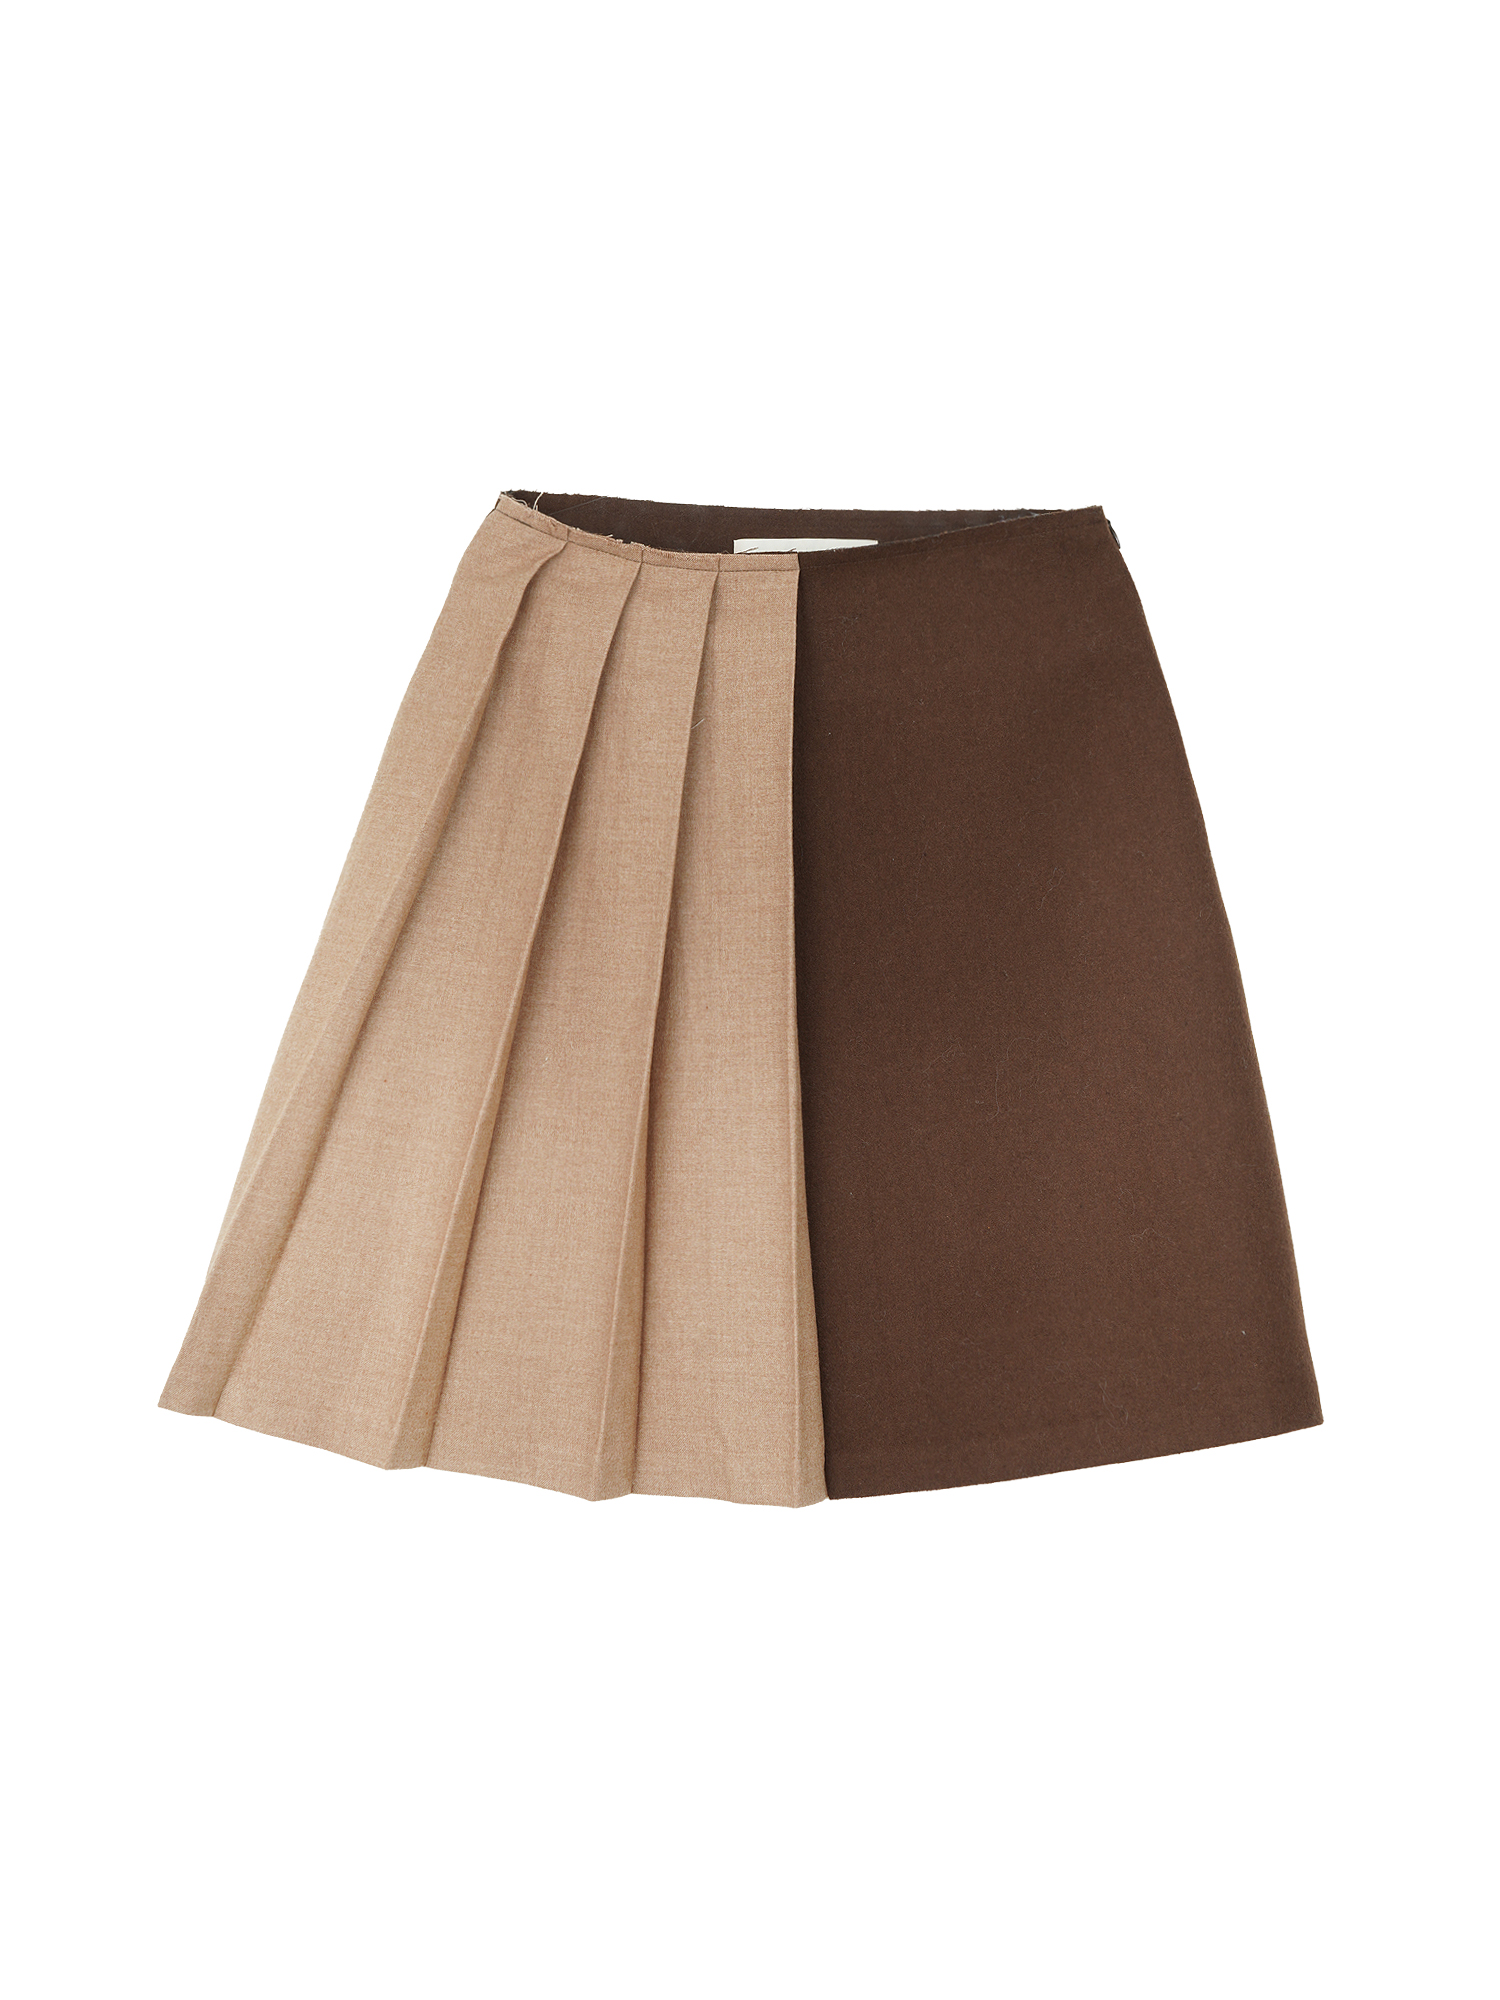 Wool Double Pleated Skirt - Beige Brown